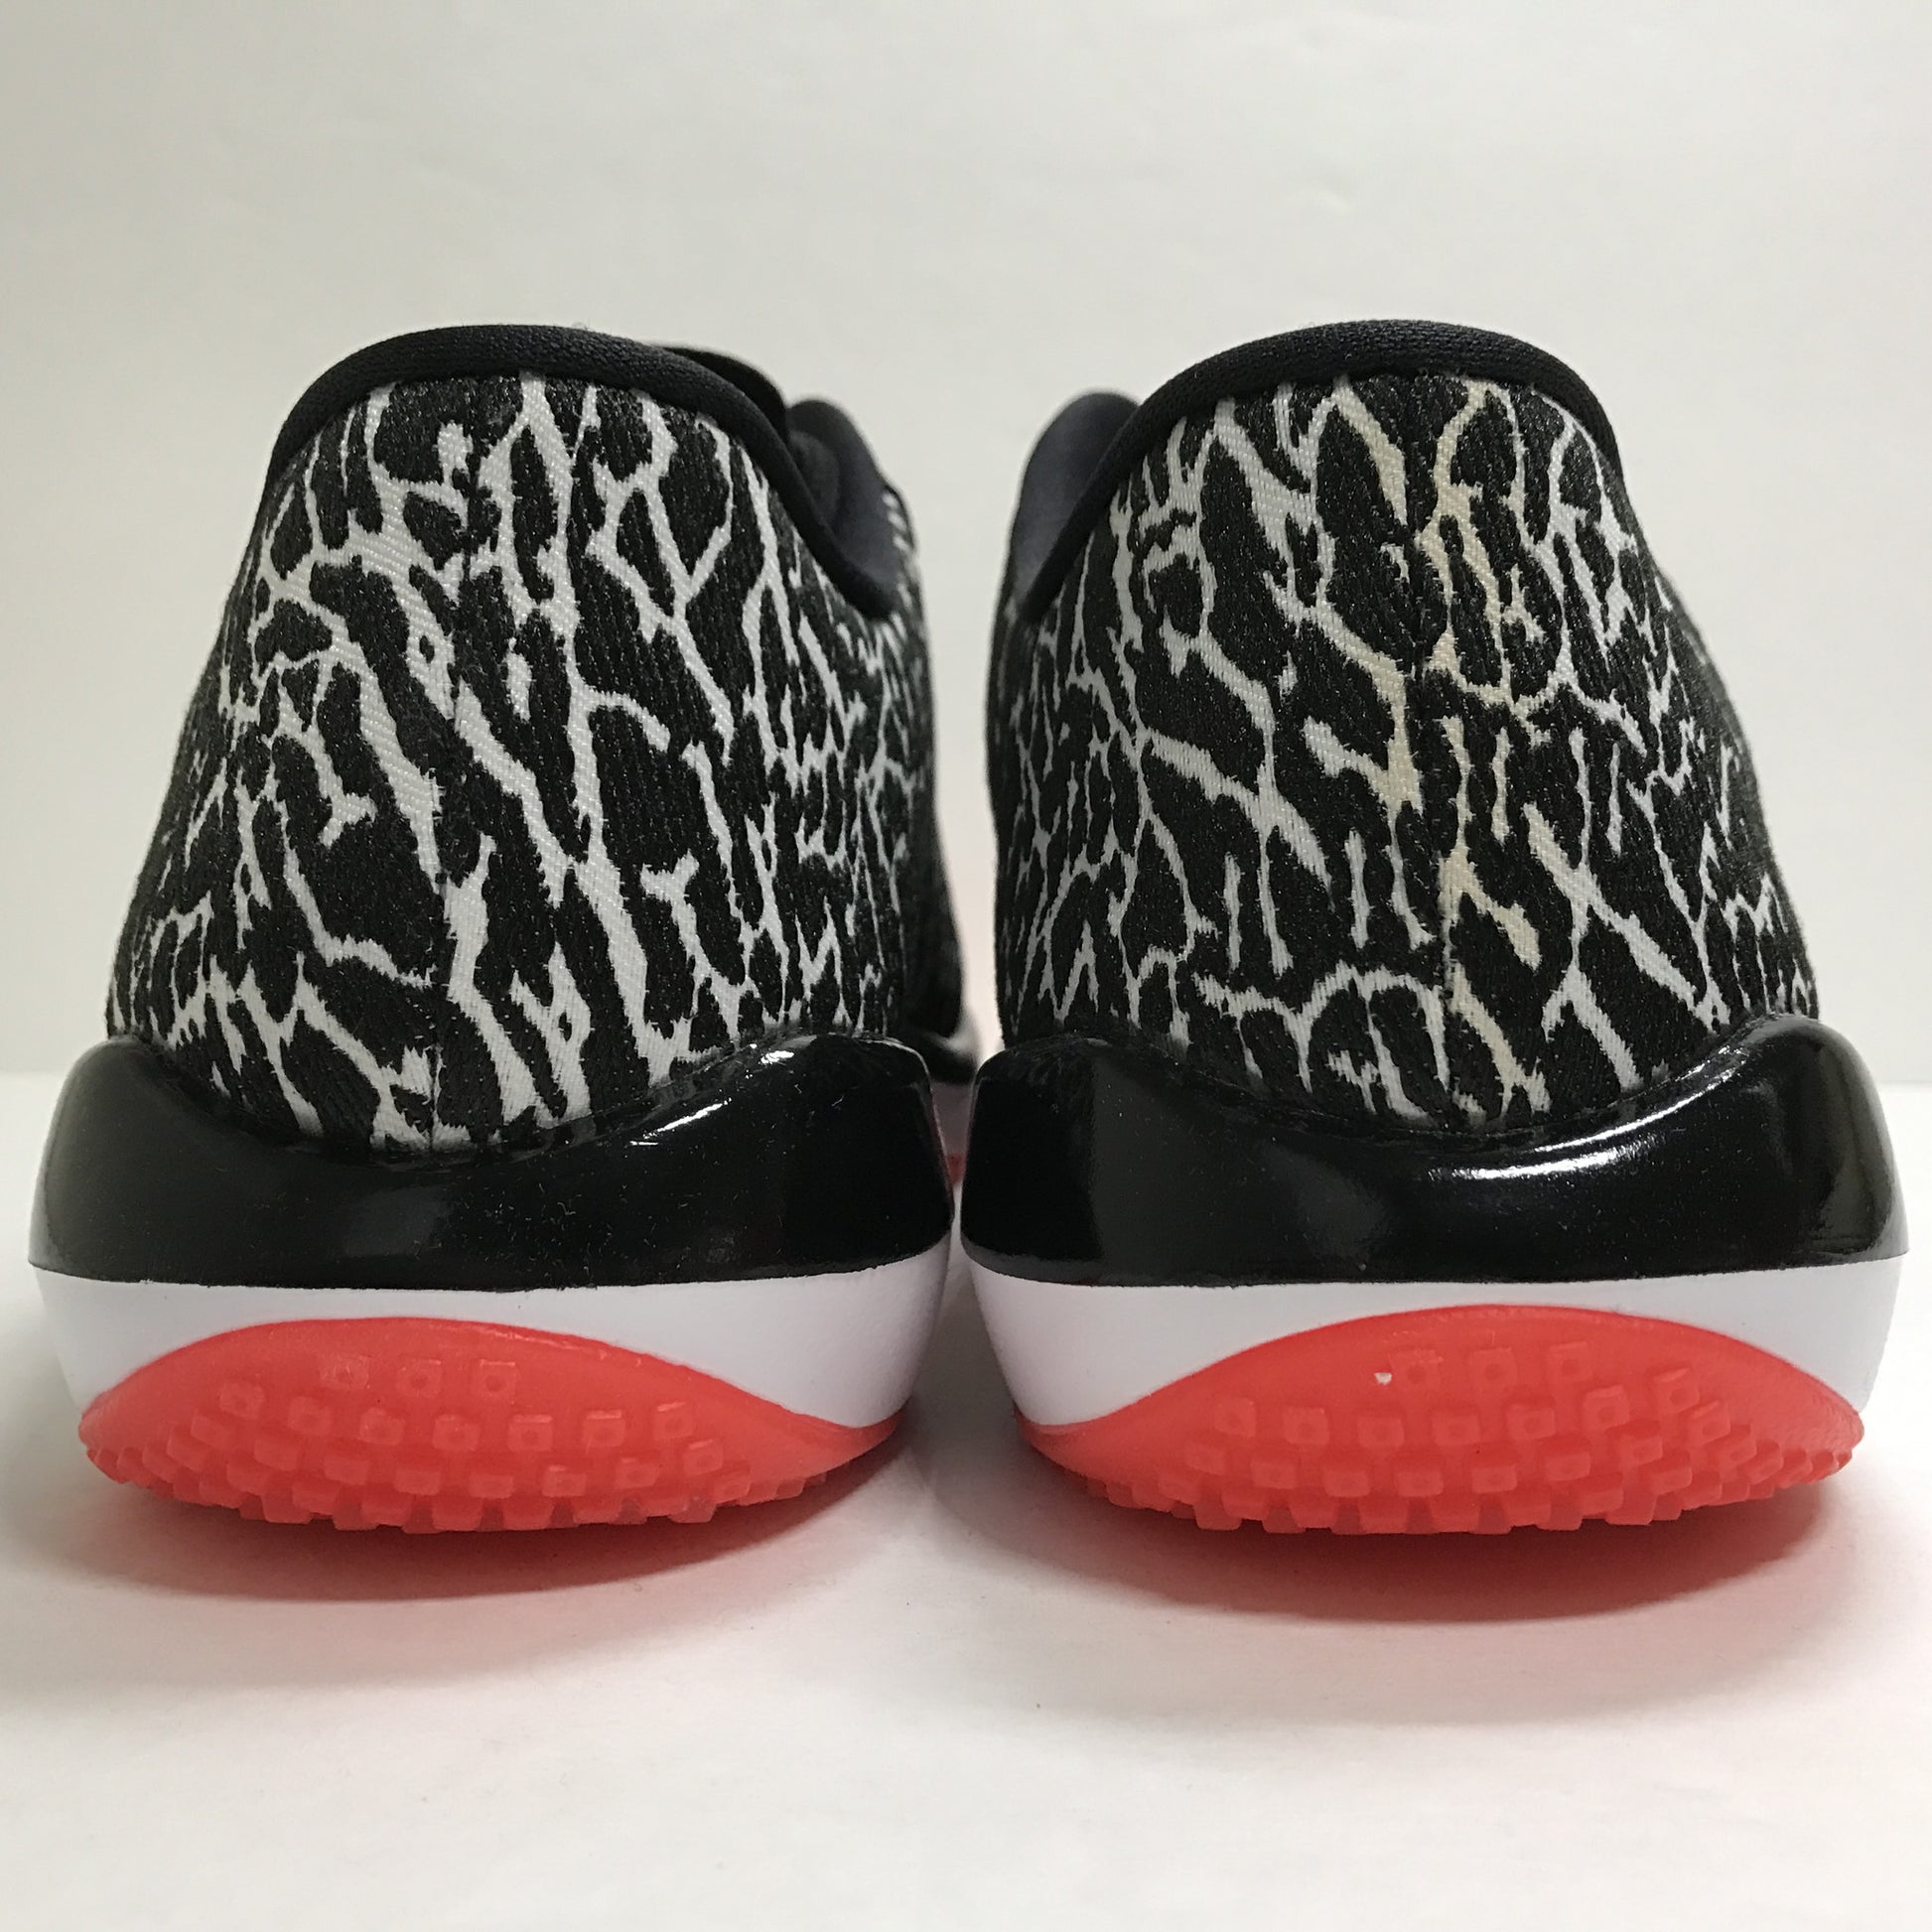 DS Nike Air Jordan Trainer 1 Black Elephant Print/Infrared  Low BG Size 7Y - DOPEFOOT
 - 7